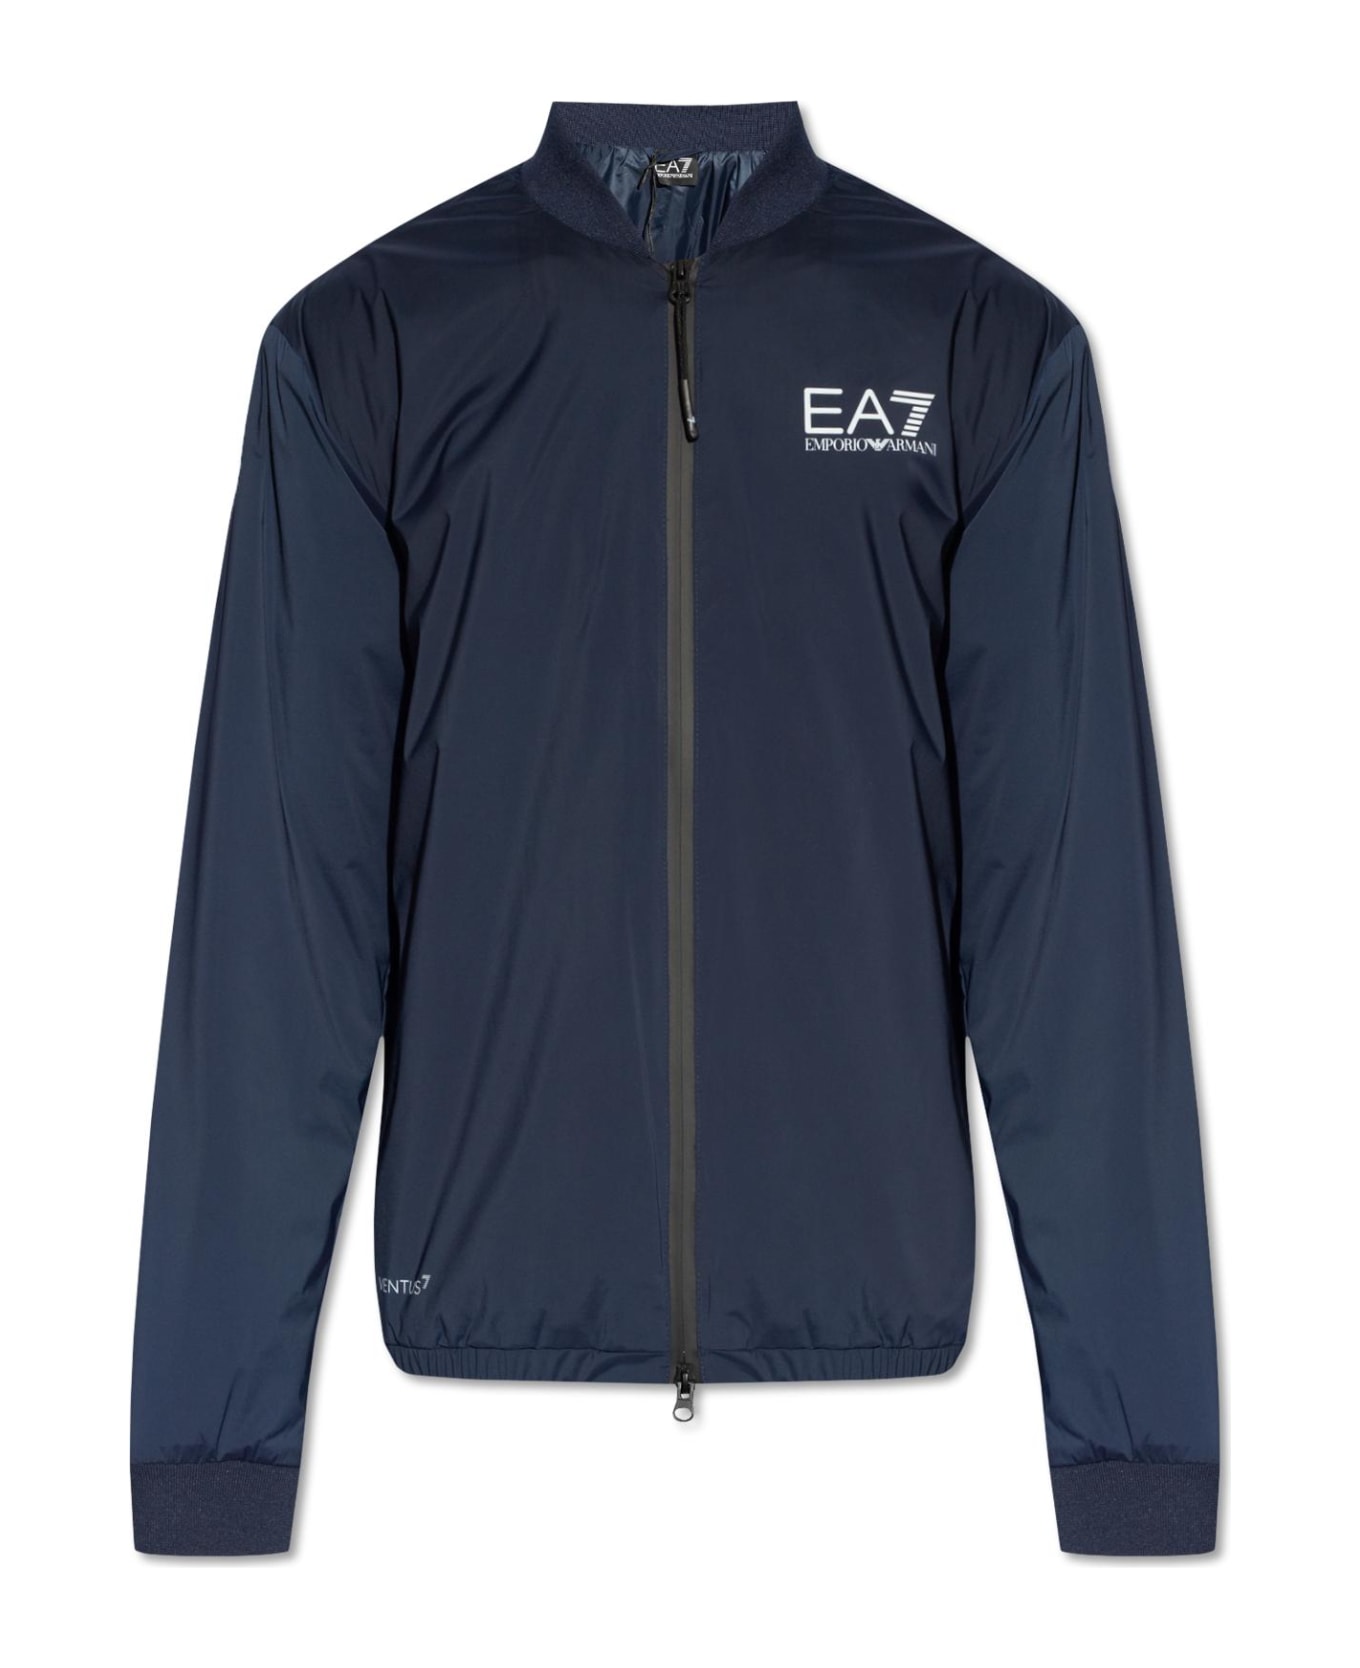 EA7 Emporio Armani Jacket With Logo - Blue ジャケット